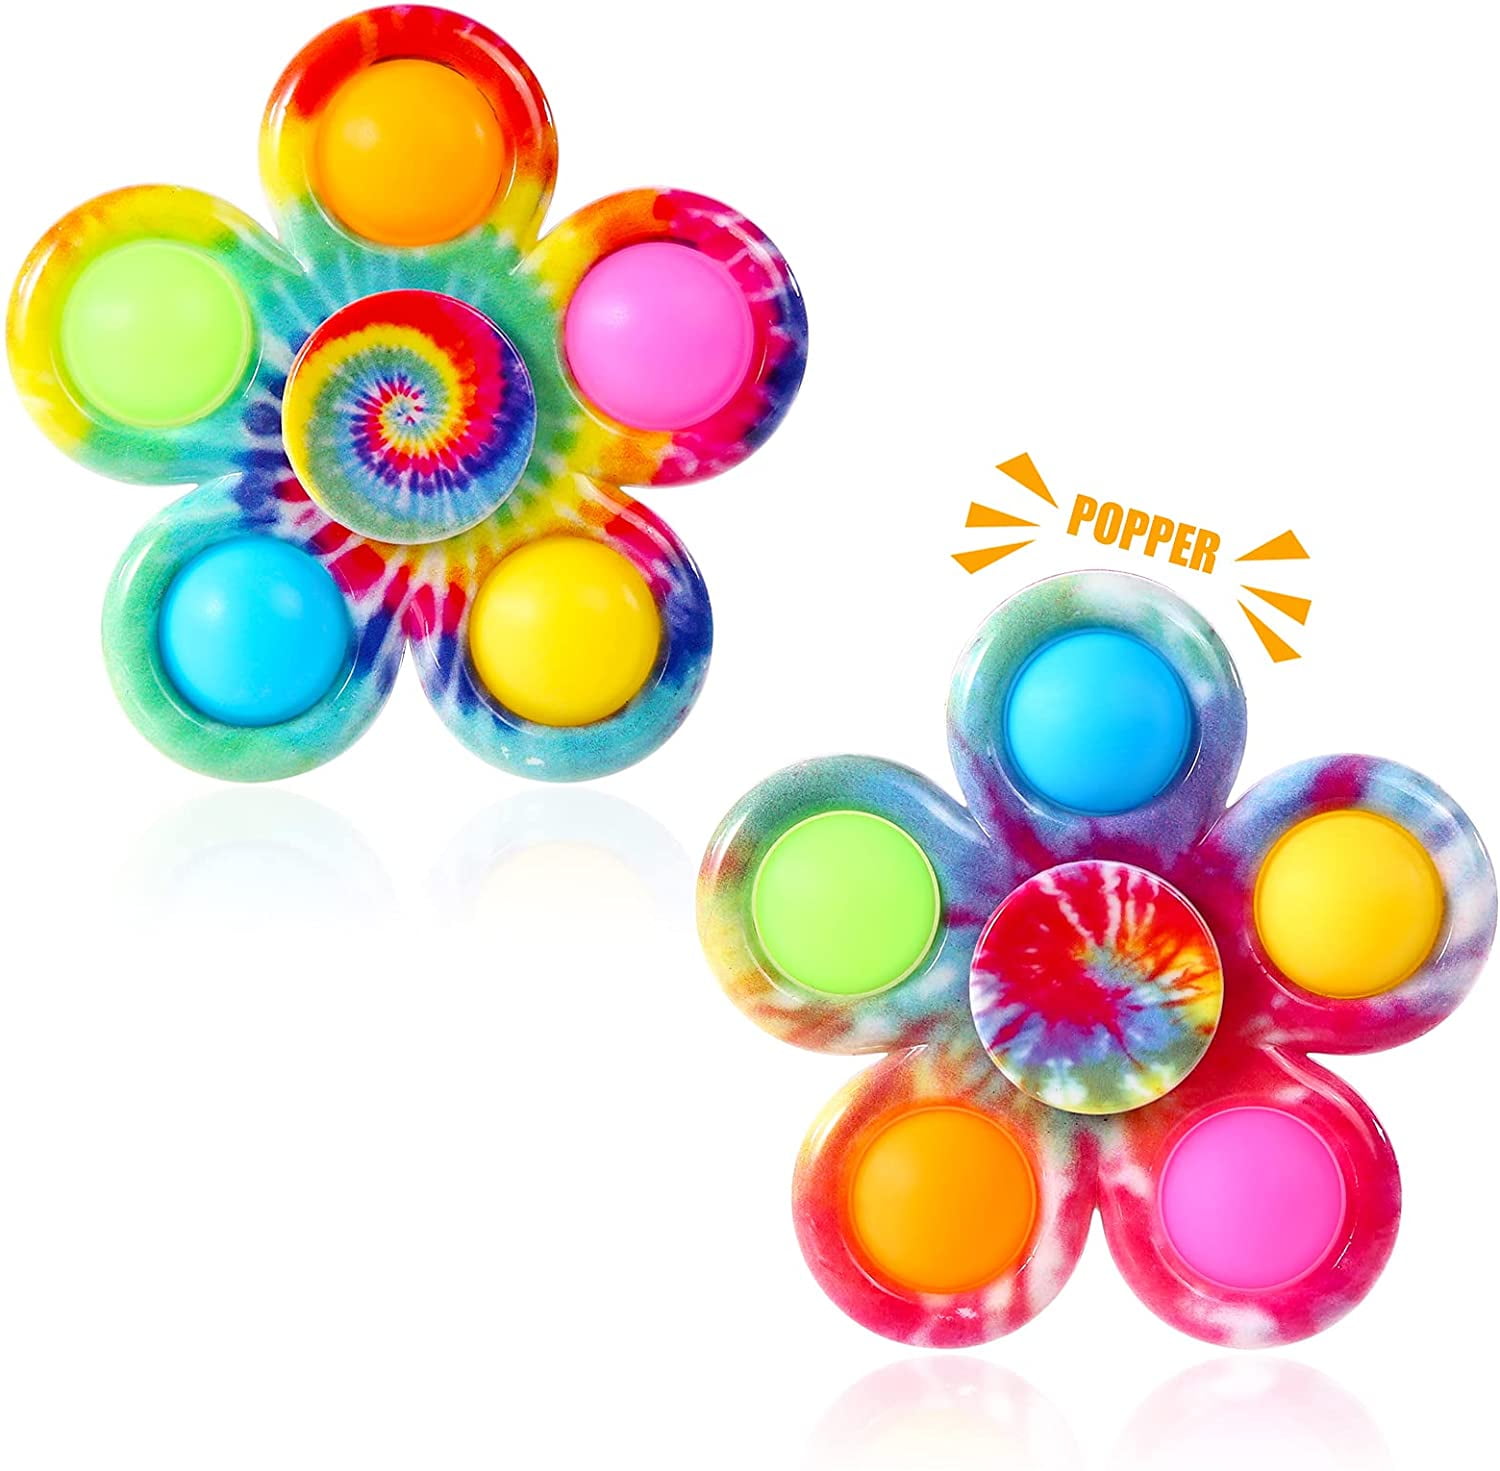 Details about   Tie-dye FIDGET POPPER push popper Stress Relief Toys Square Round Kids NEW 